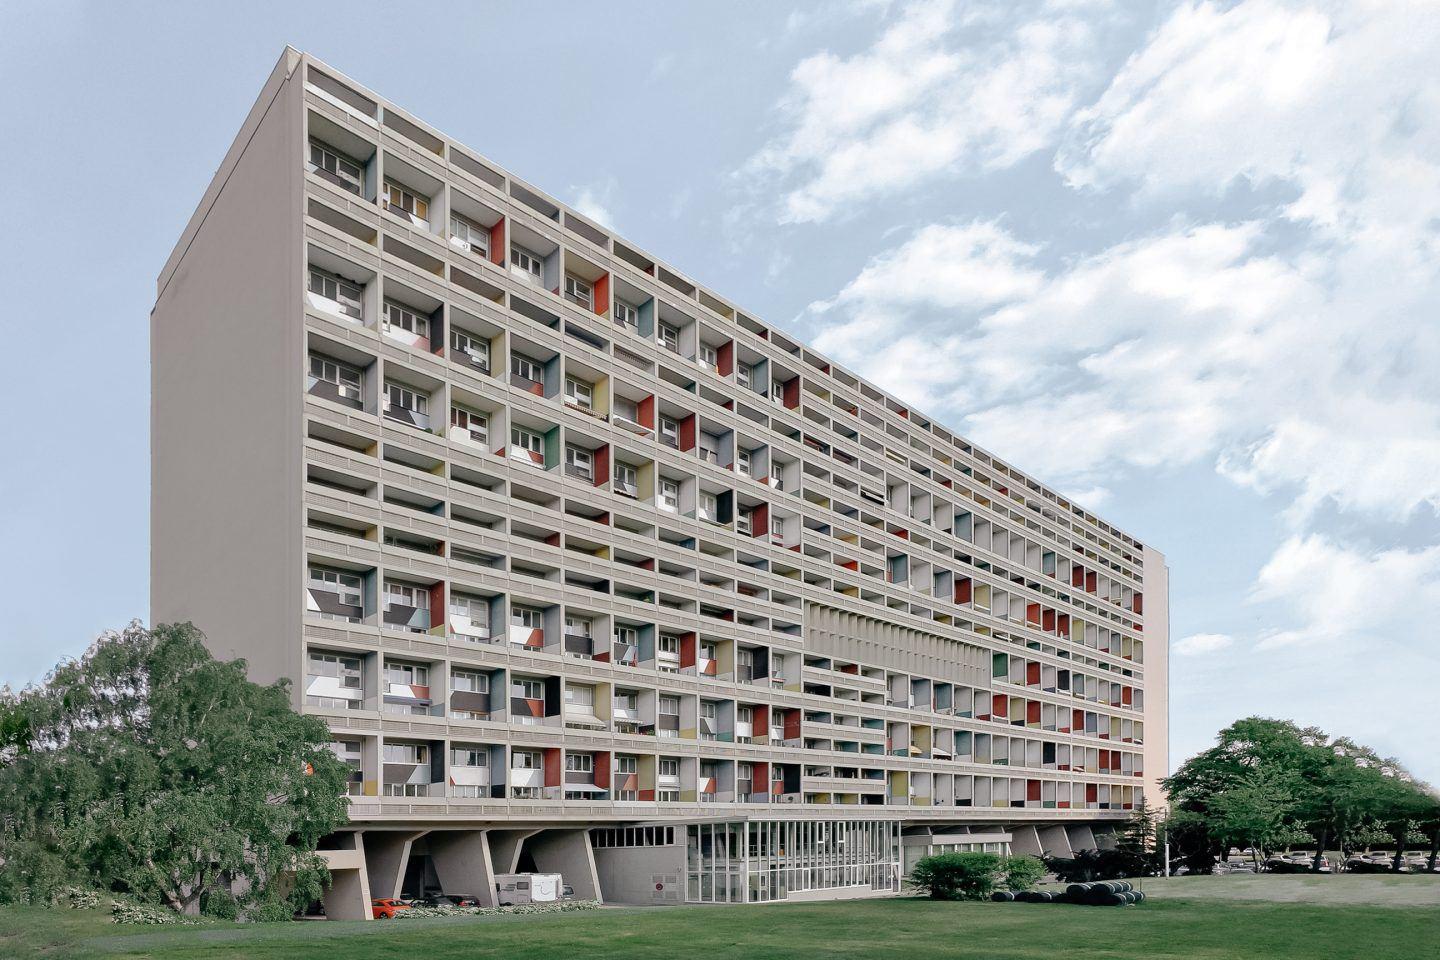 “Le Corbusierhaus” – Berlin